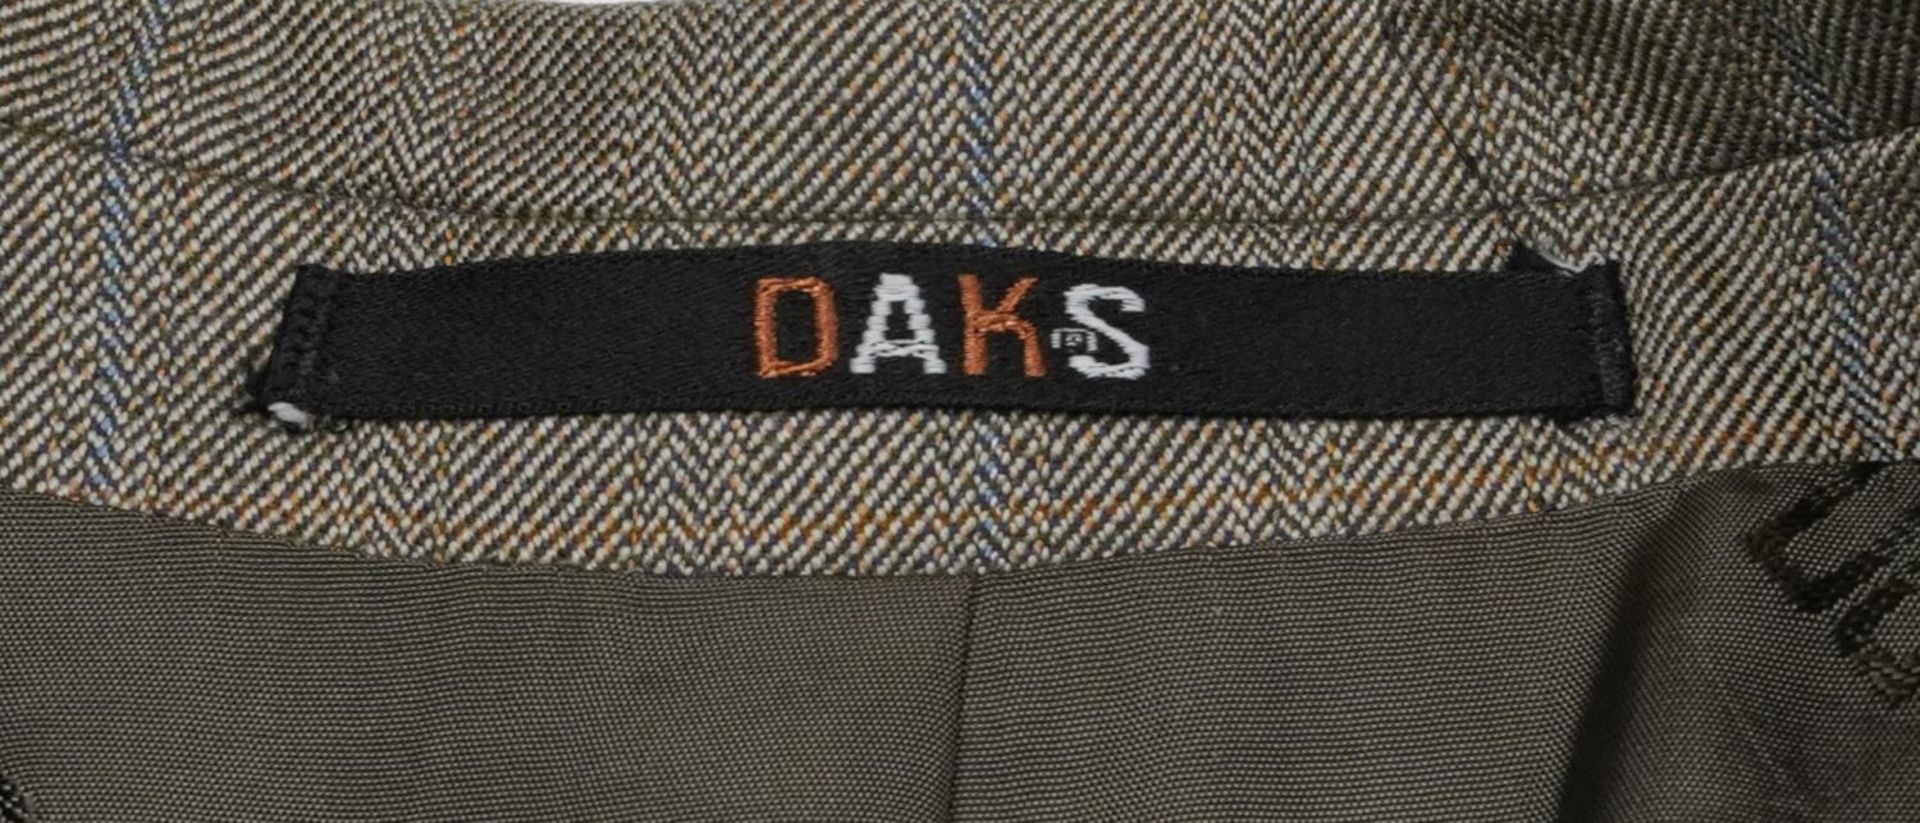 Daks London linen blend jacket together with a Butler & Webb example, size L : For further - Bild 4 aus 5